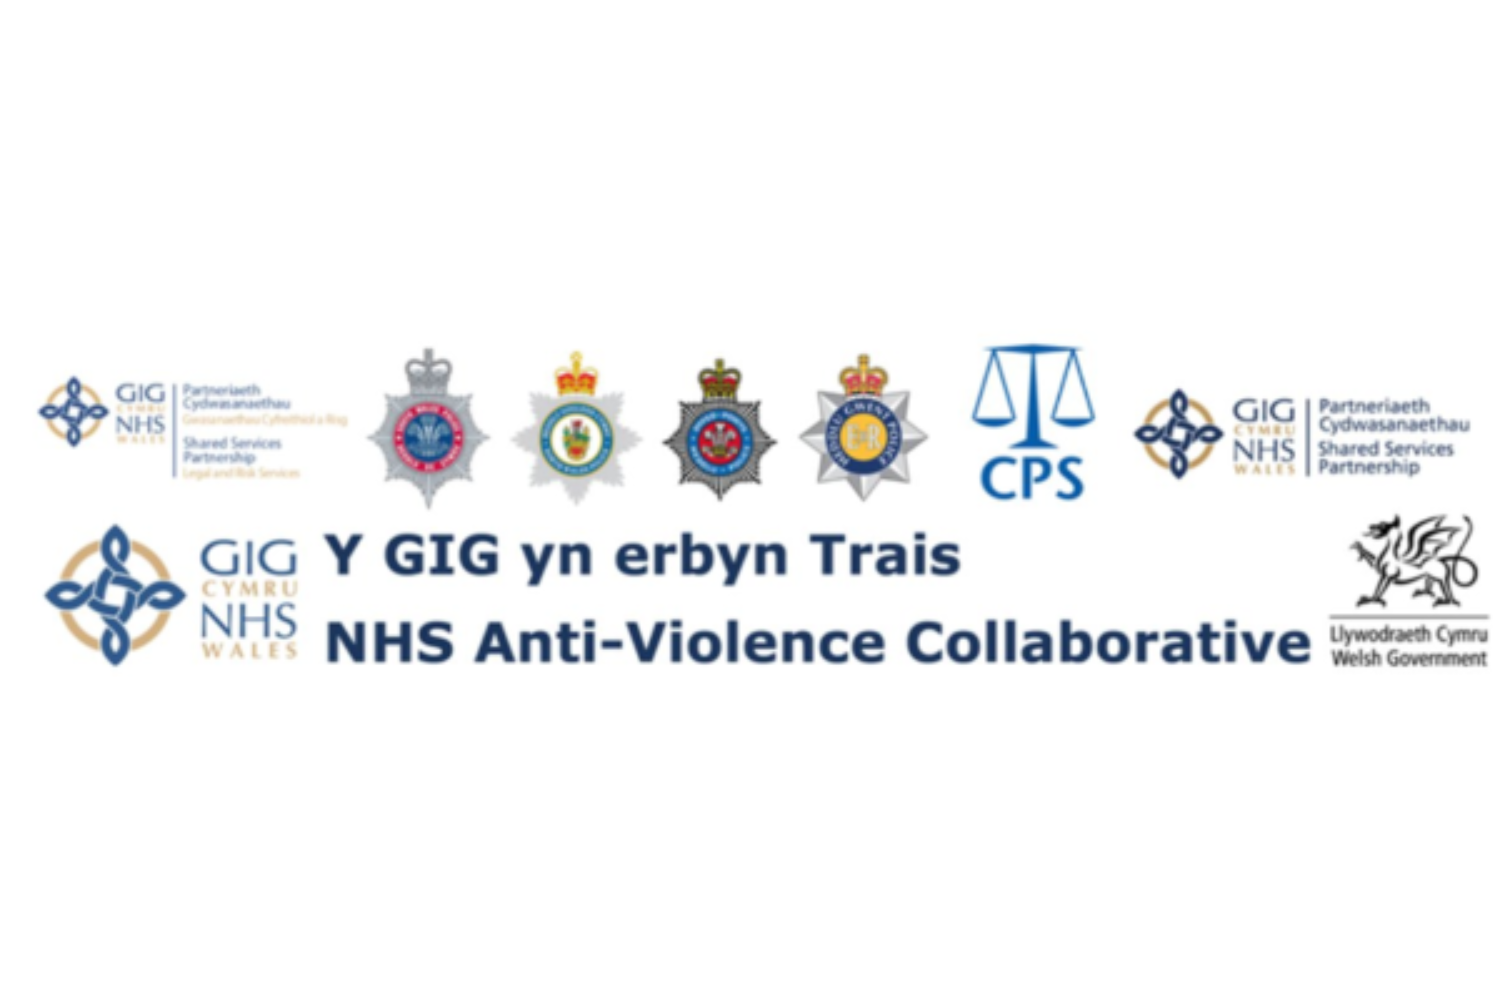 NHS Anti-Violence Collaborative